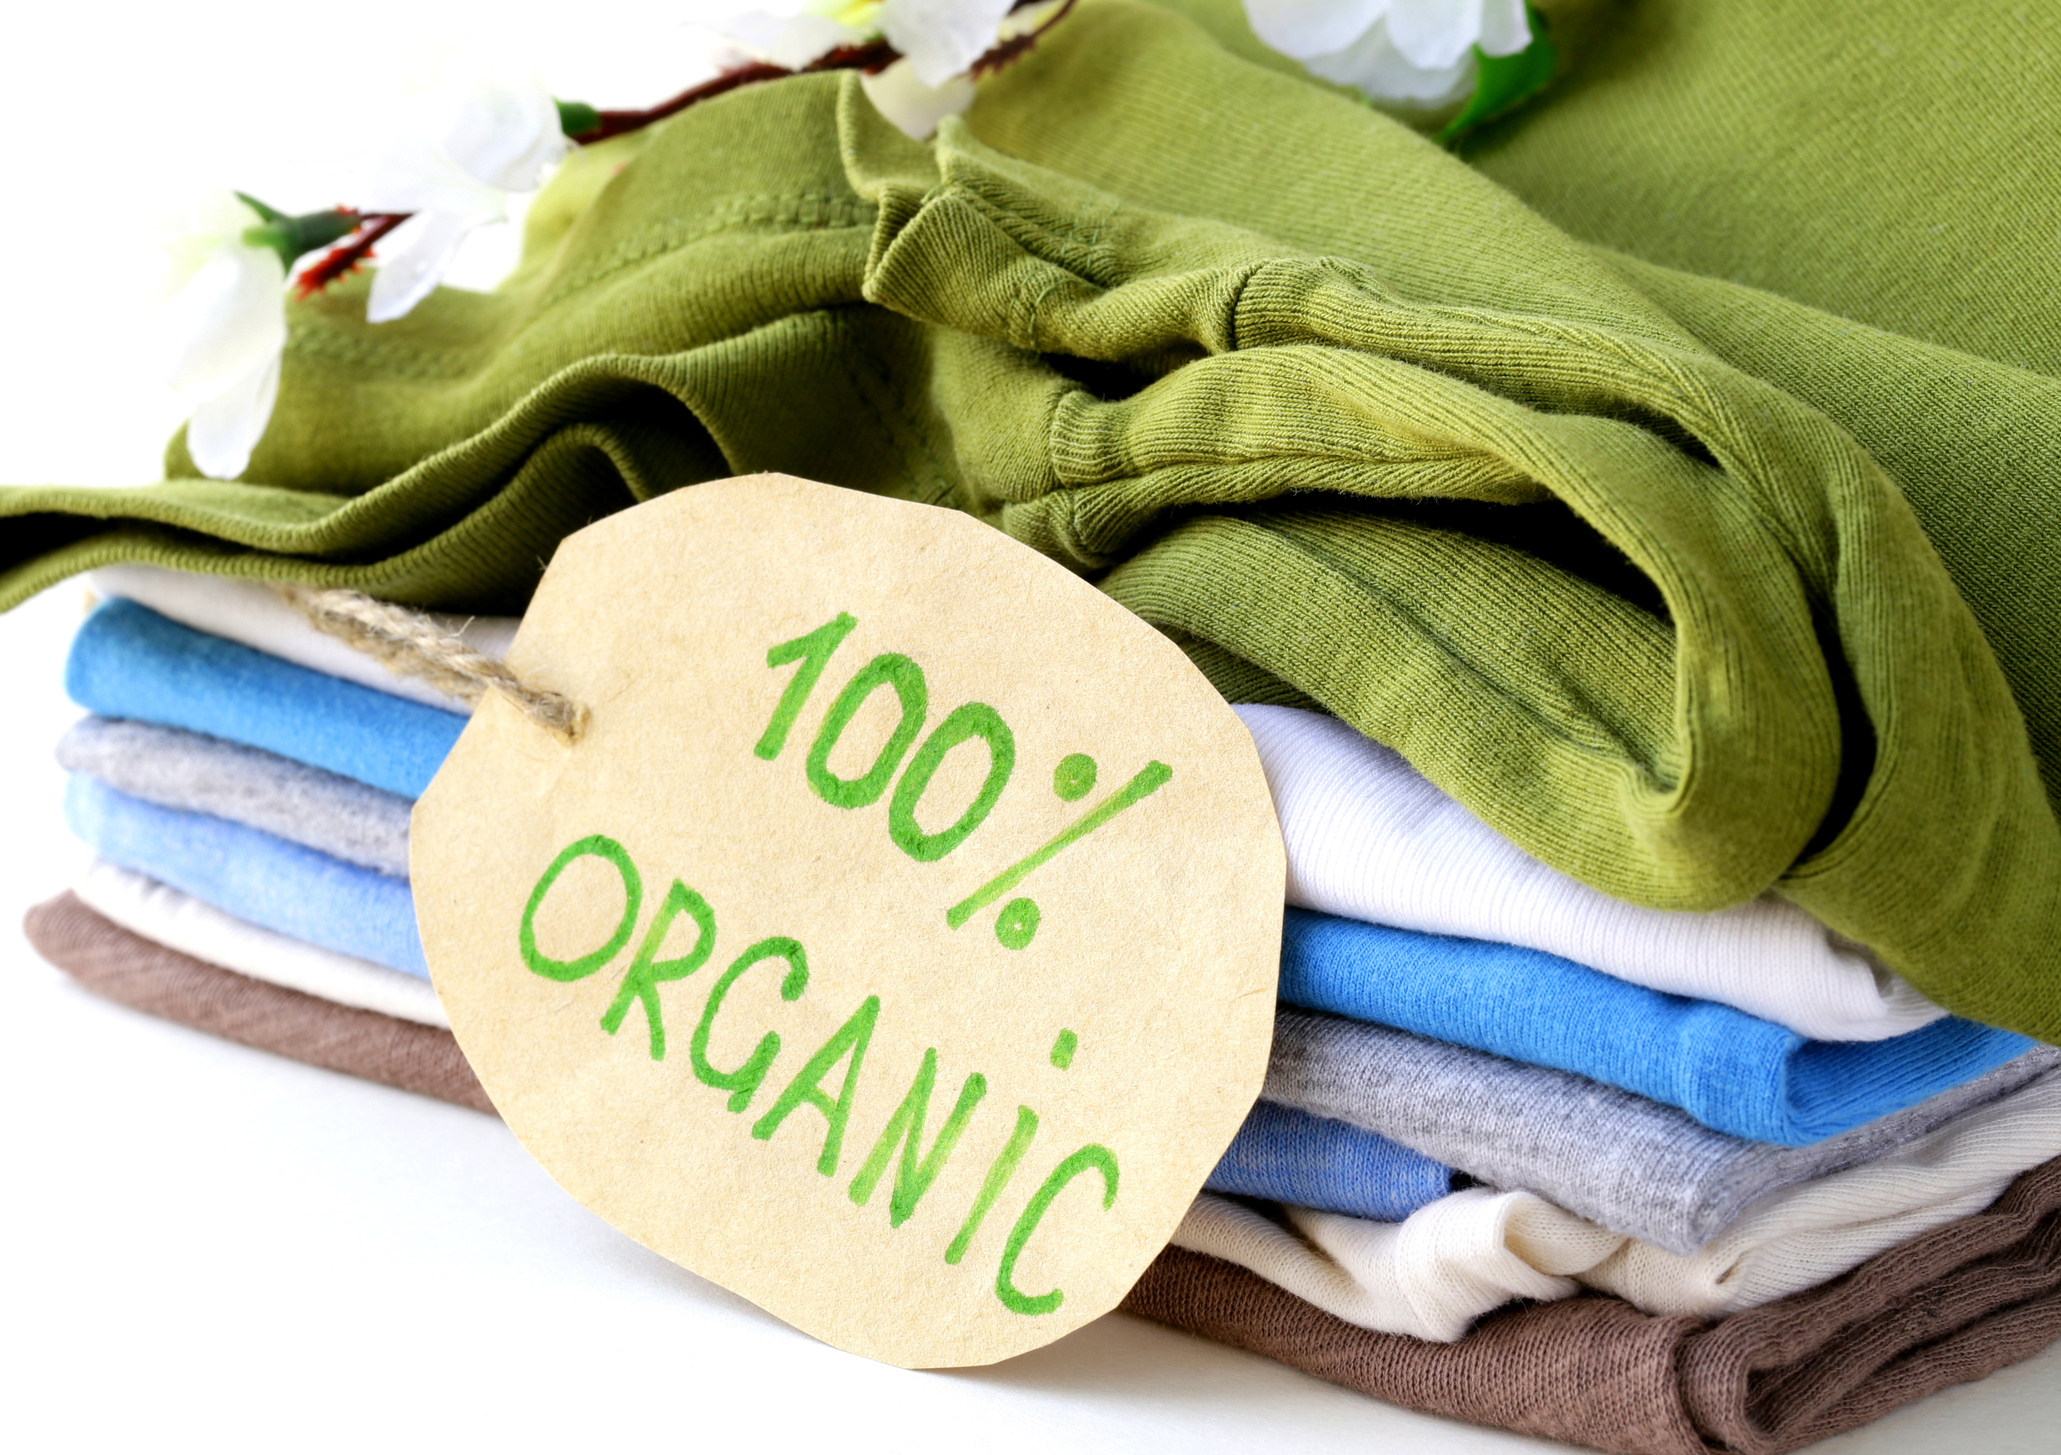 Material quality. Экологичная одежда. Экологичные ткани. Экологически чистая одежда. Эко одежда.